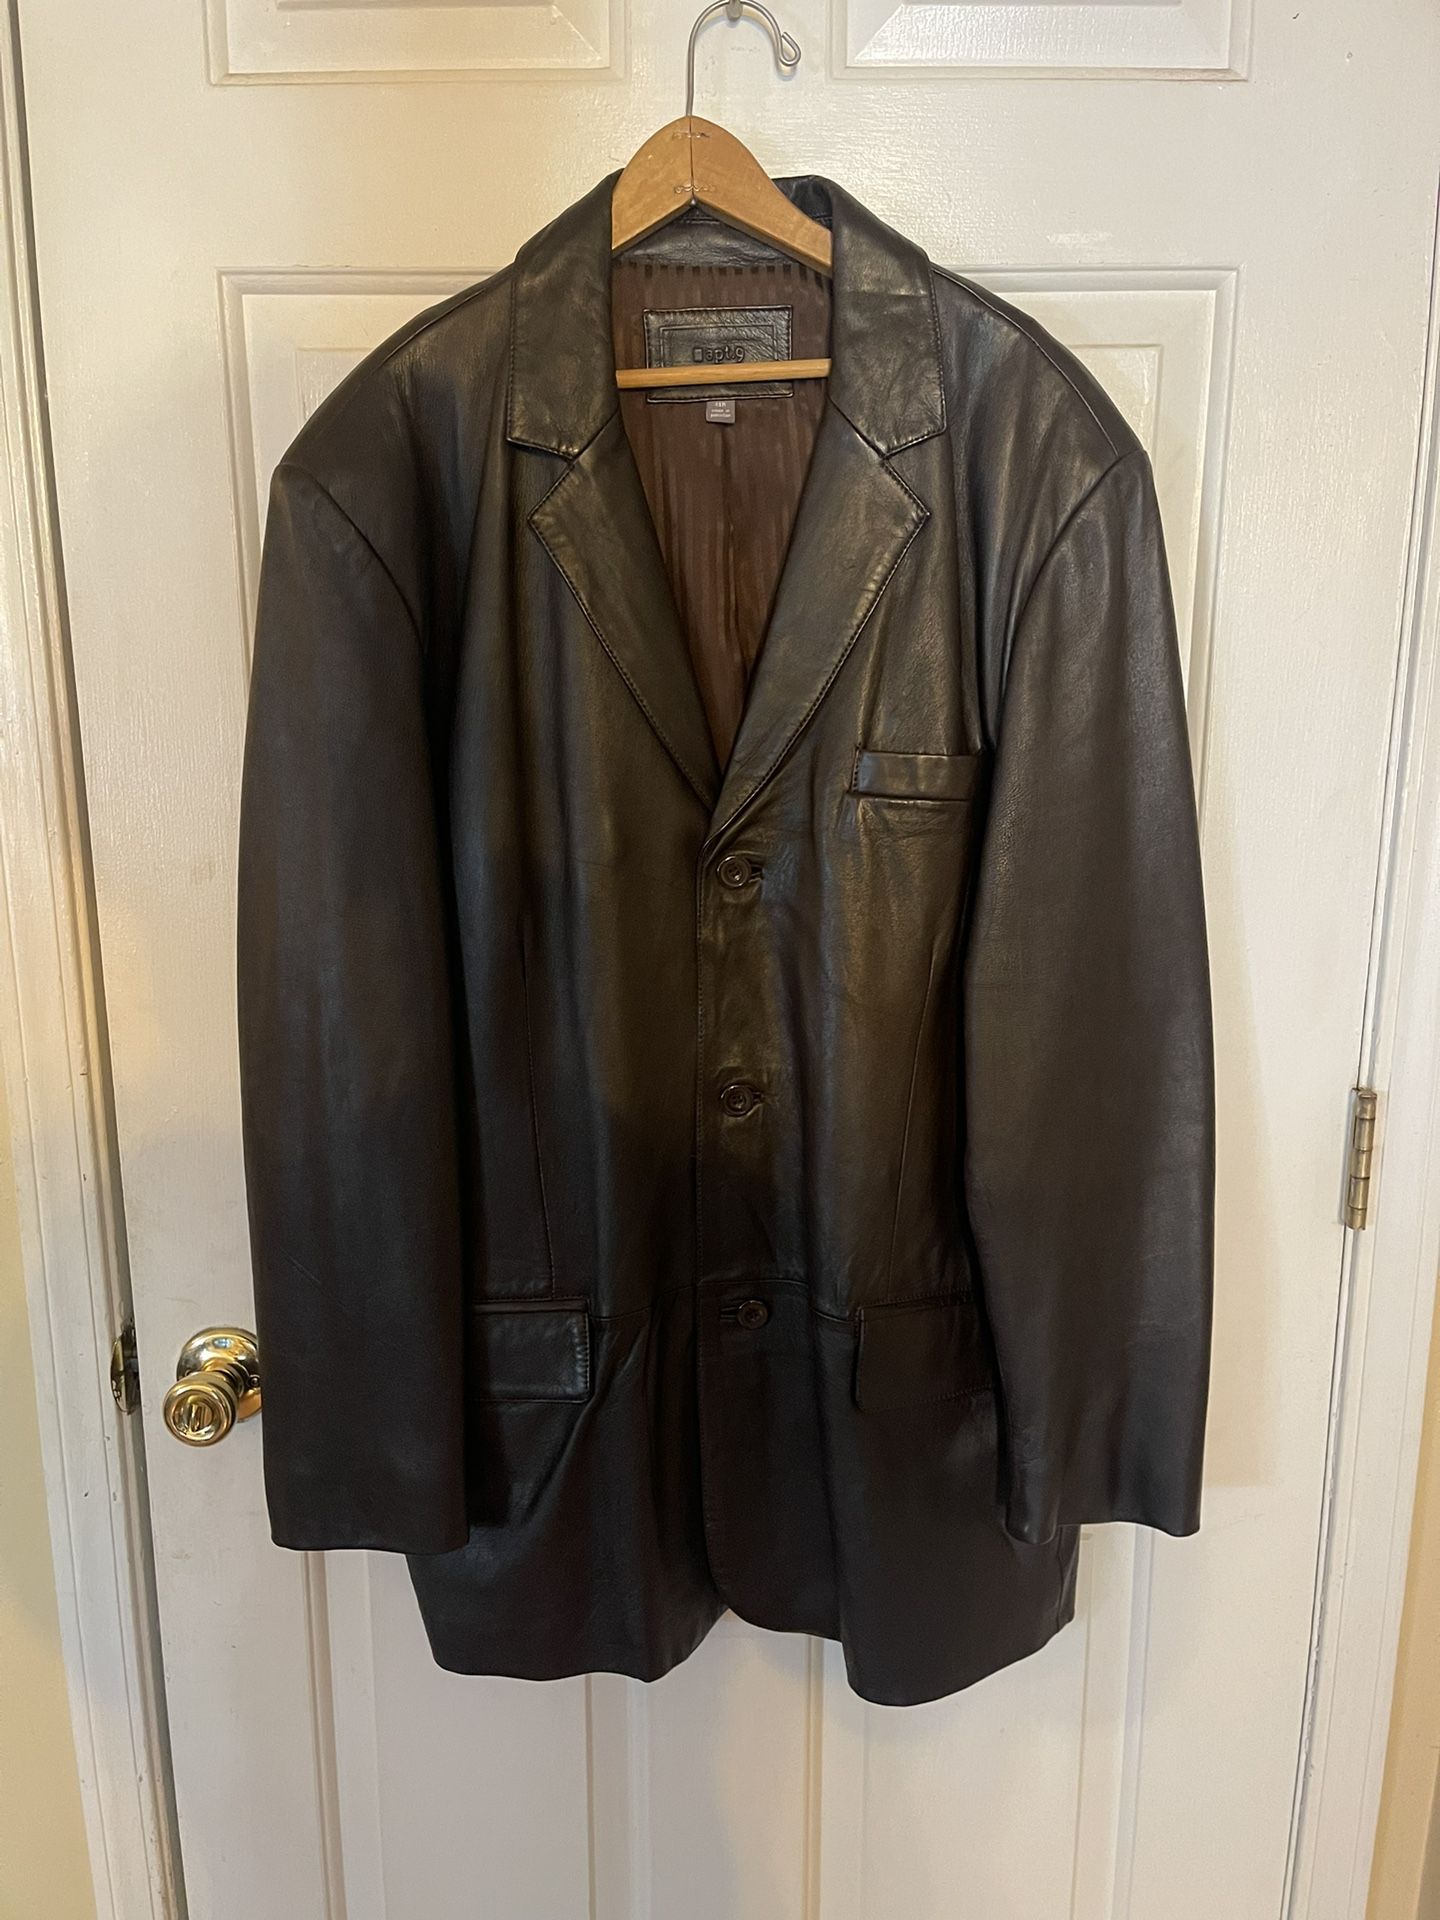 Men’s butter soft brown leather jacket